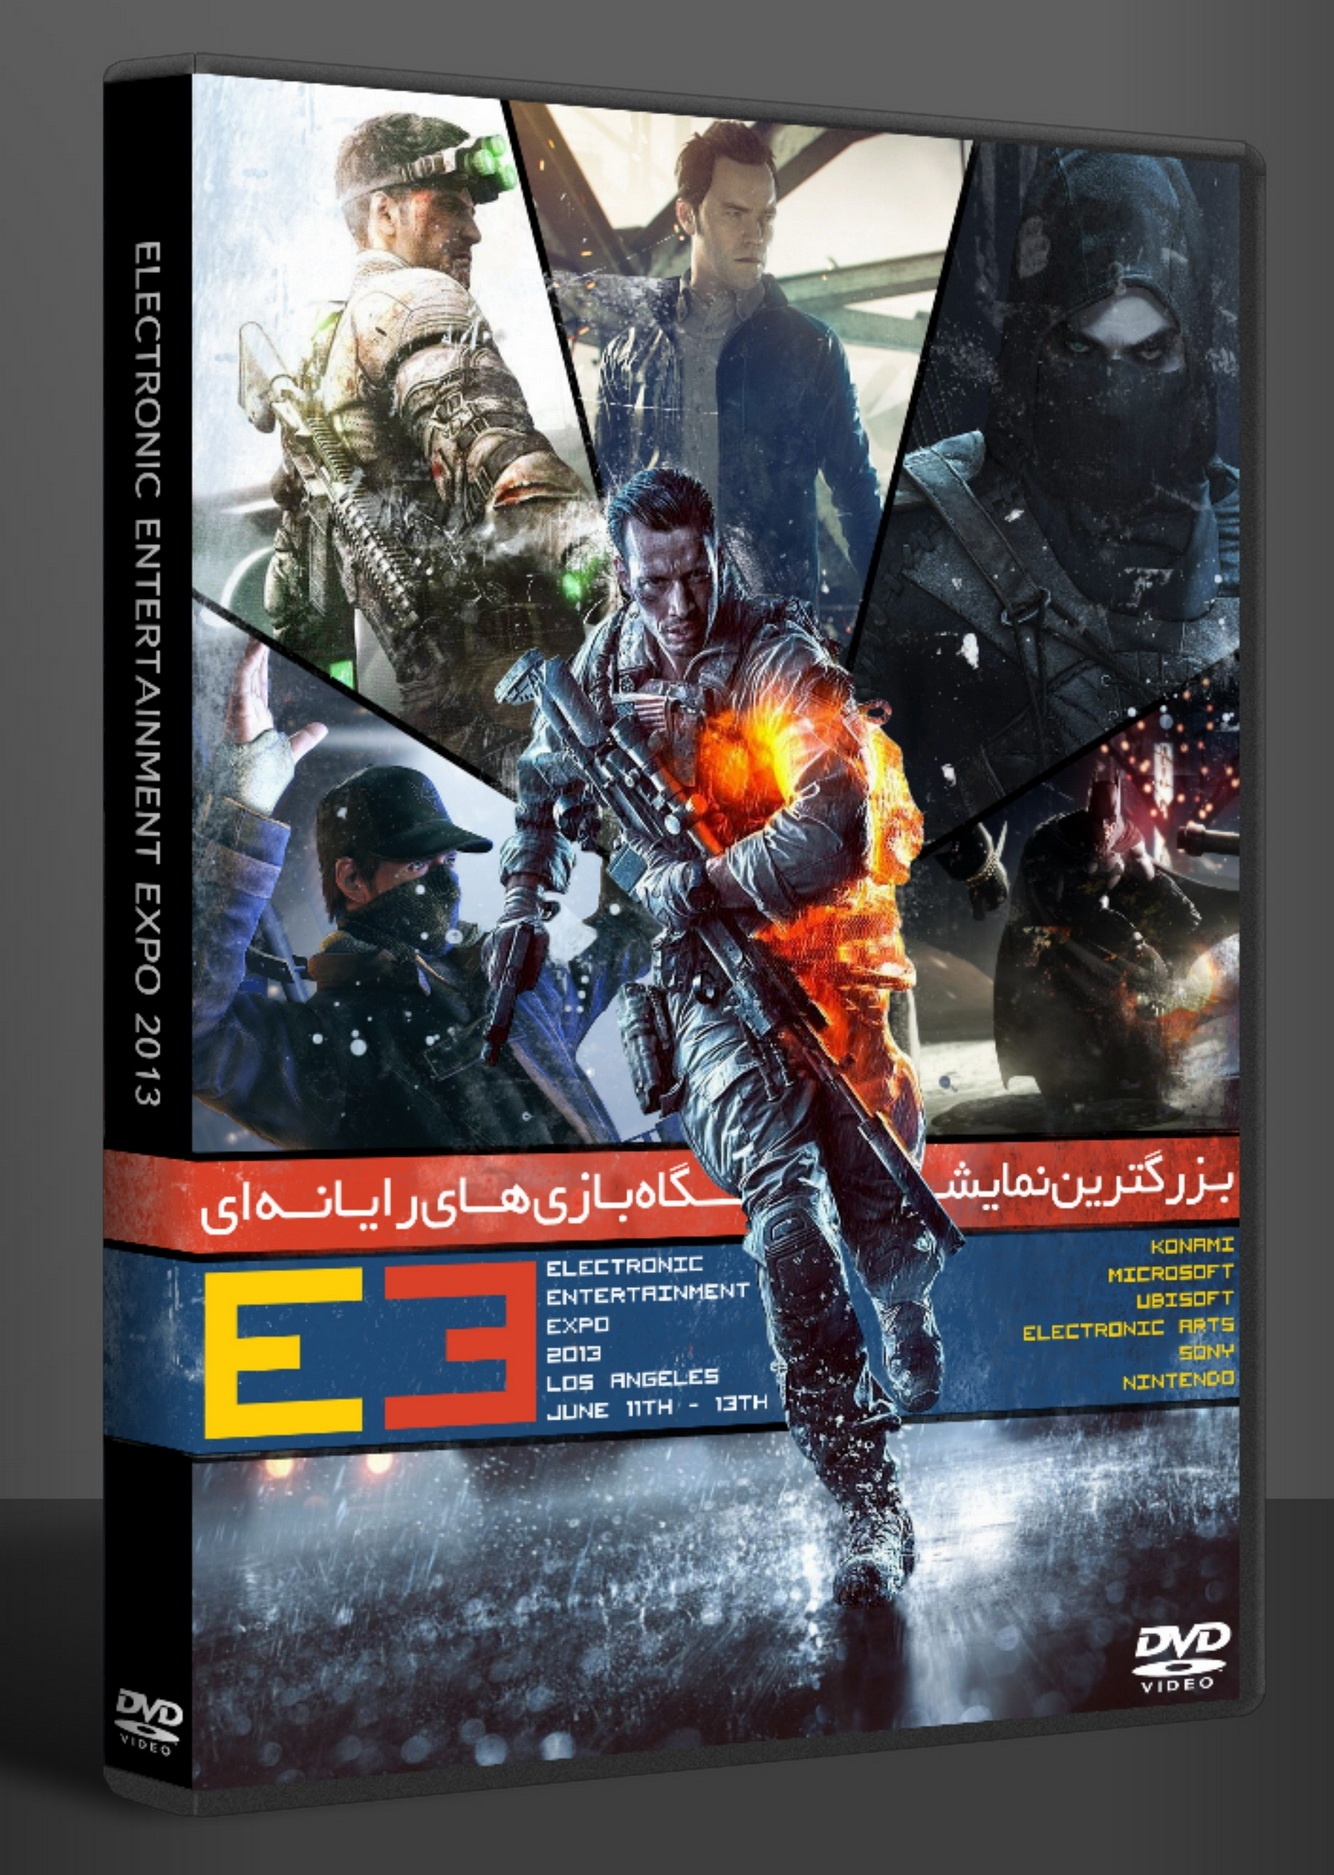 Electronic Entertainment Expo 2013 box cover